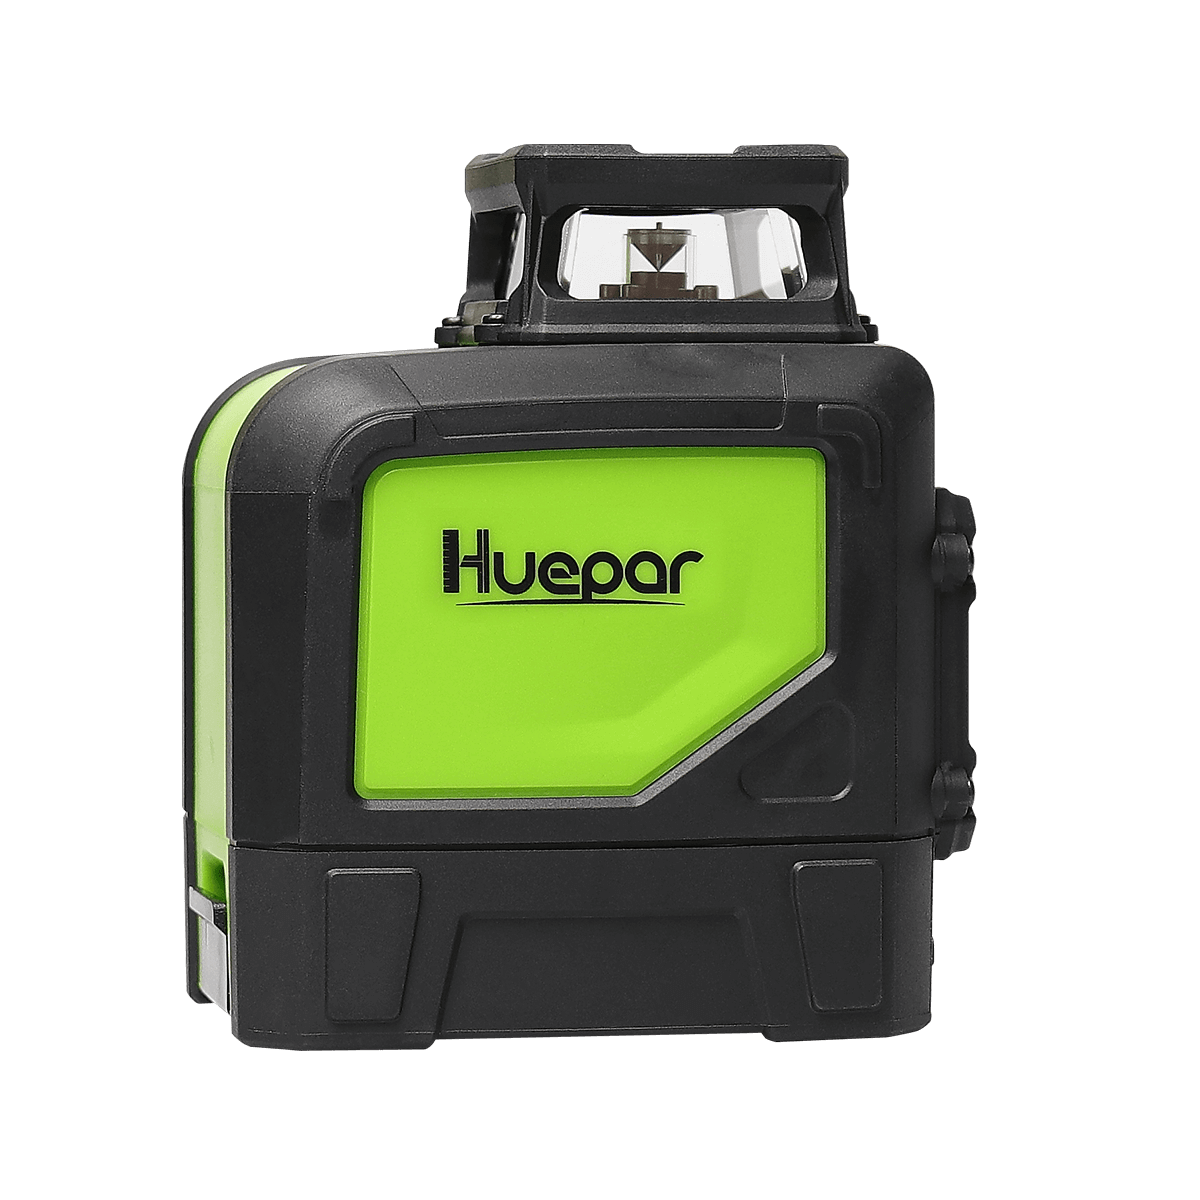 Huepar BOX-1G Outdoor 150 Degree 510nm Nivel Laser Self-leveling Vertical  Horizontal Lasers Green Beam Cross Line Laser Level - AliExpress